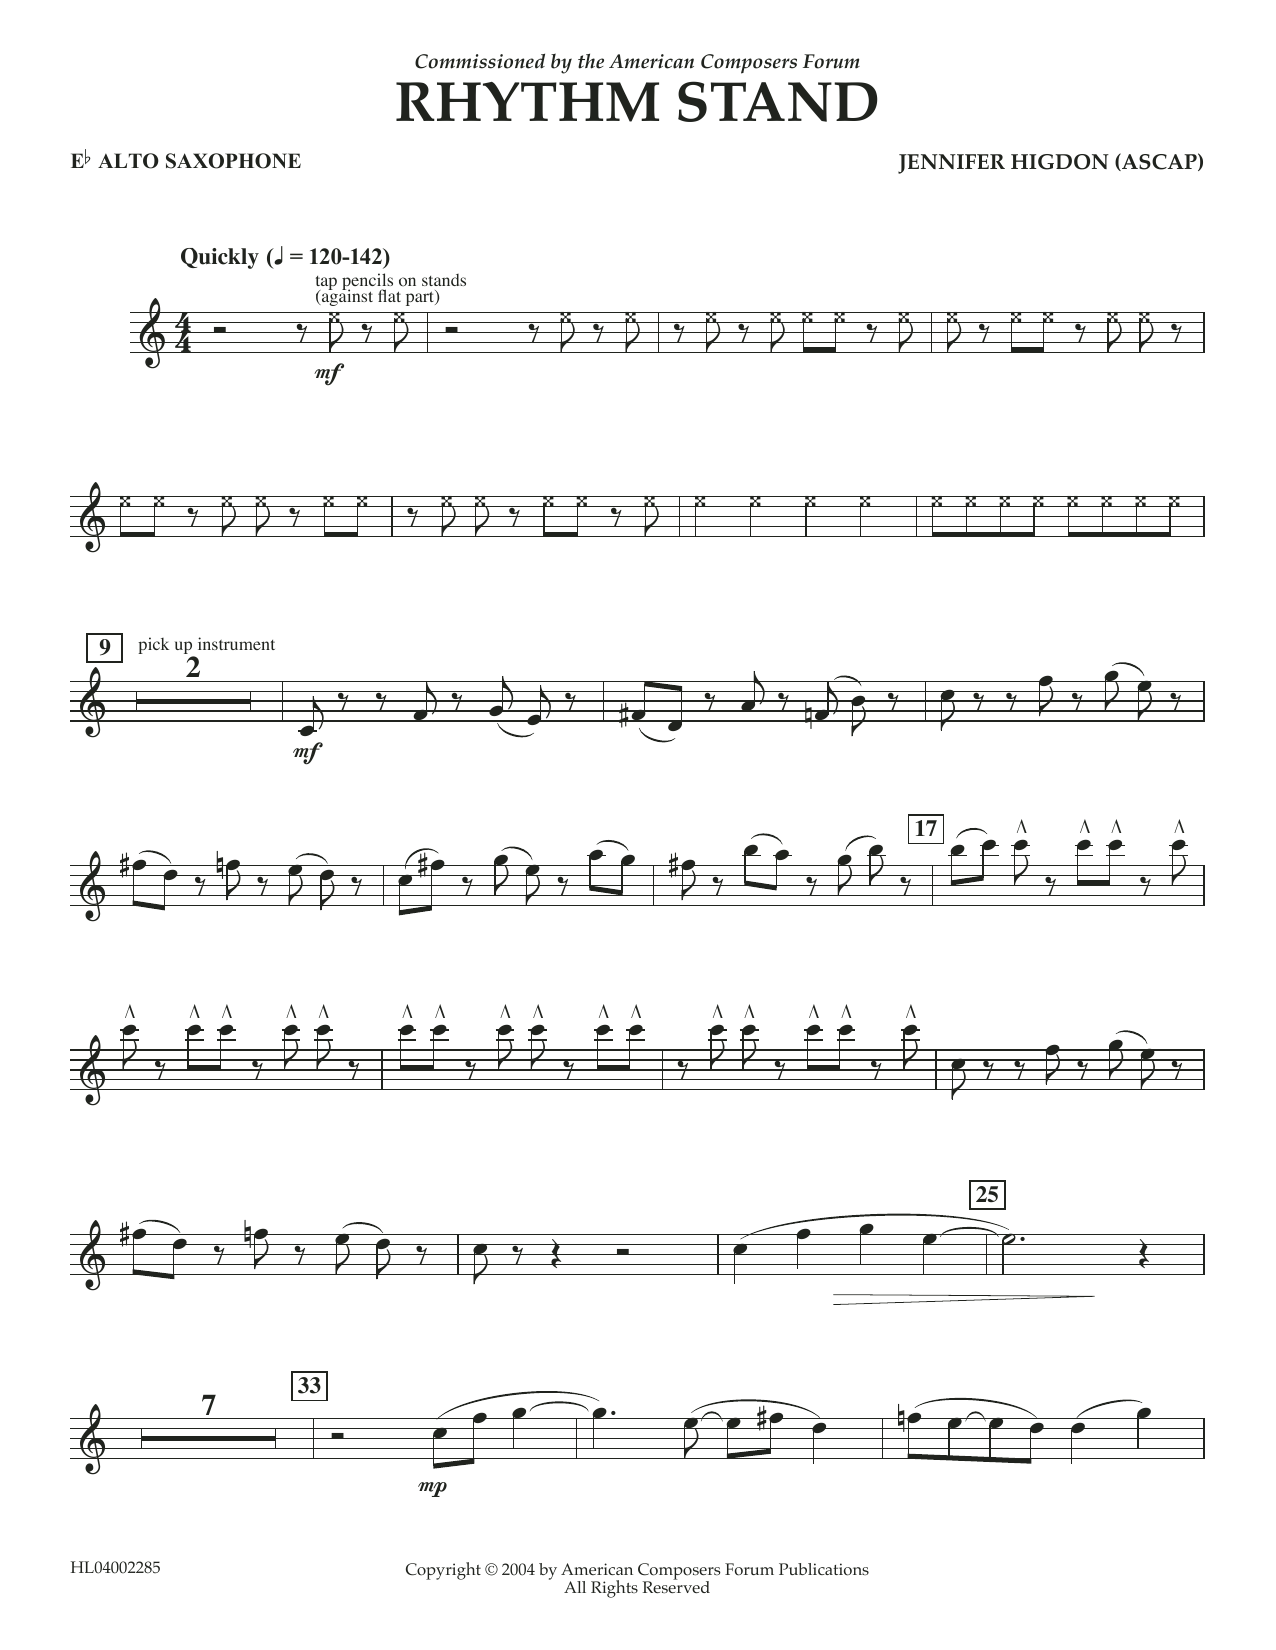 Jennifer Higdon Rhythm Stand - Eb Alto Saxophone Sheet Music Notes & Chords for Concert Band - Download or Print PDF